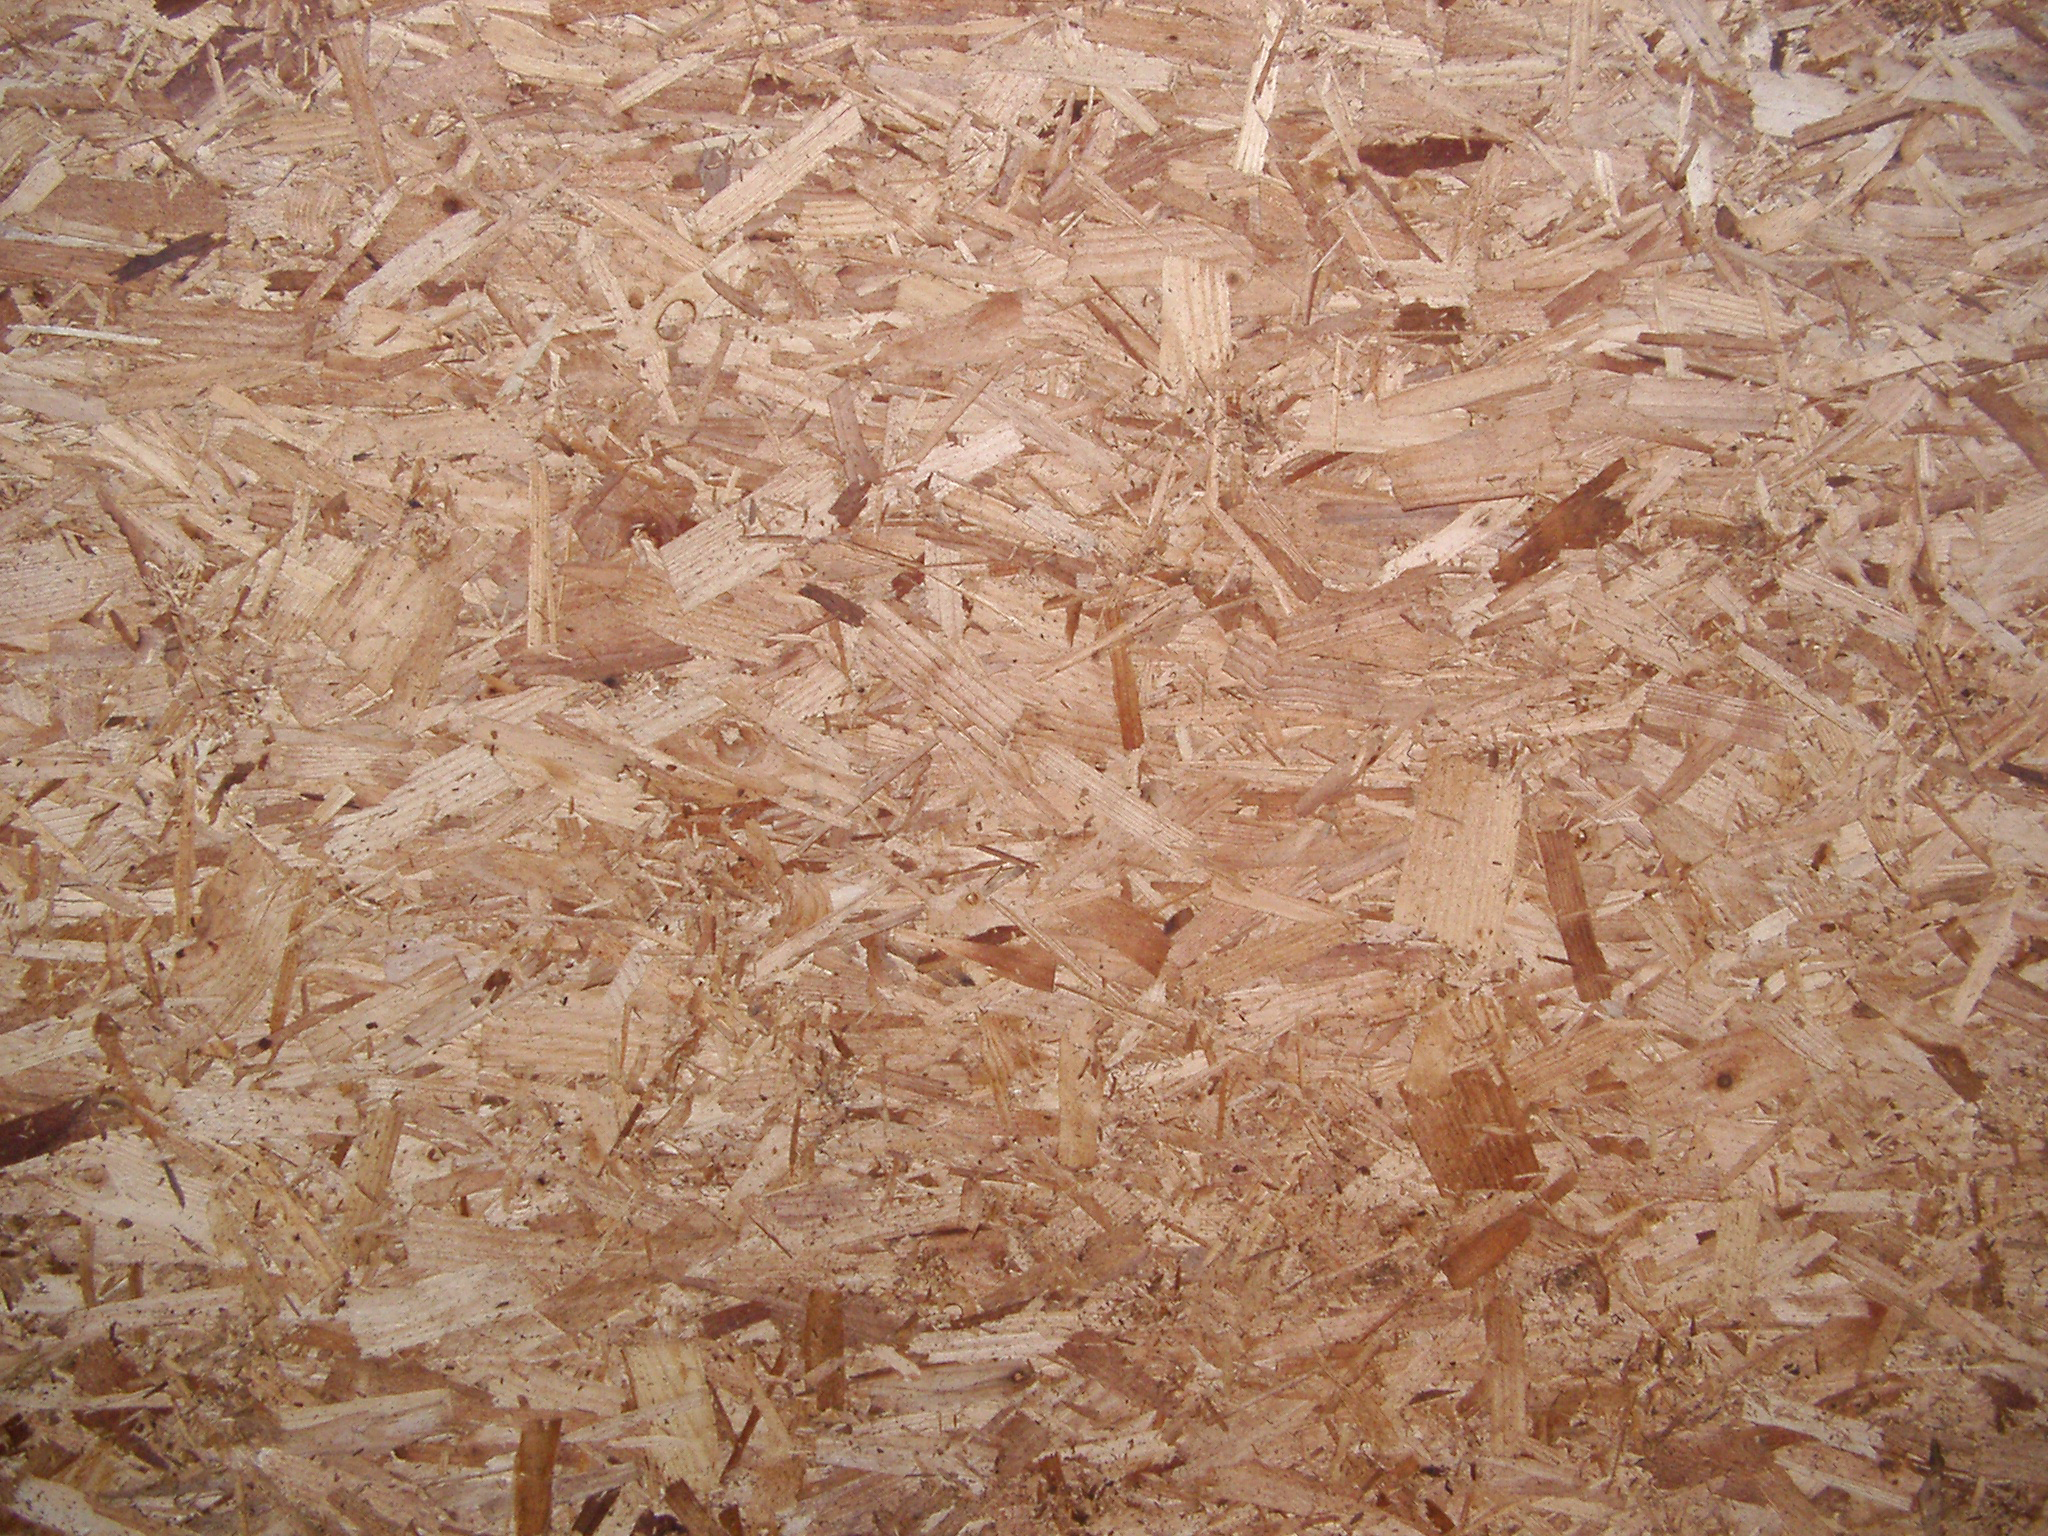 Wooden chip texture photo